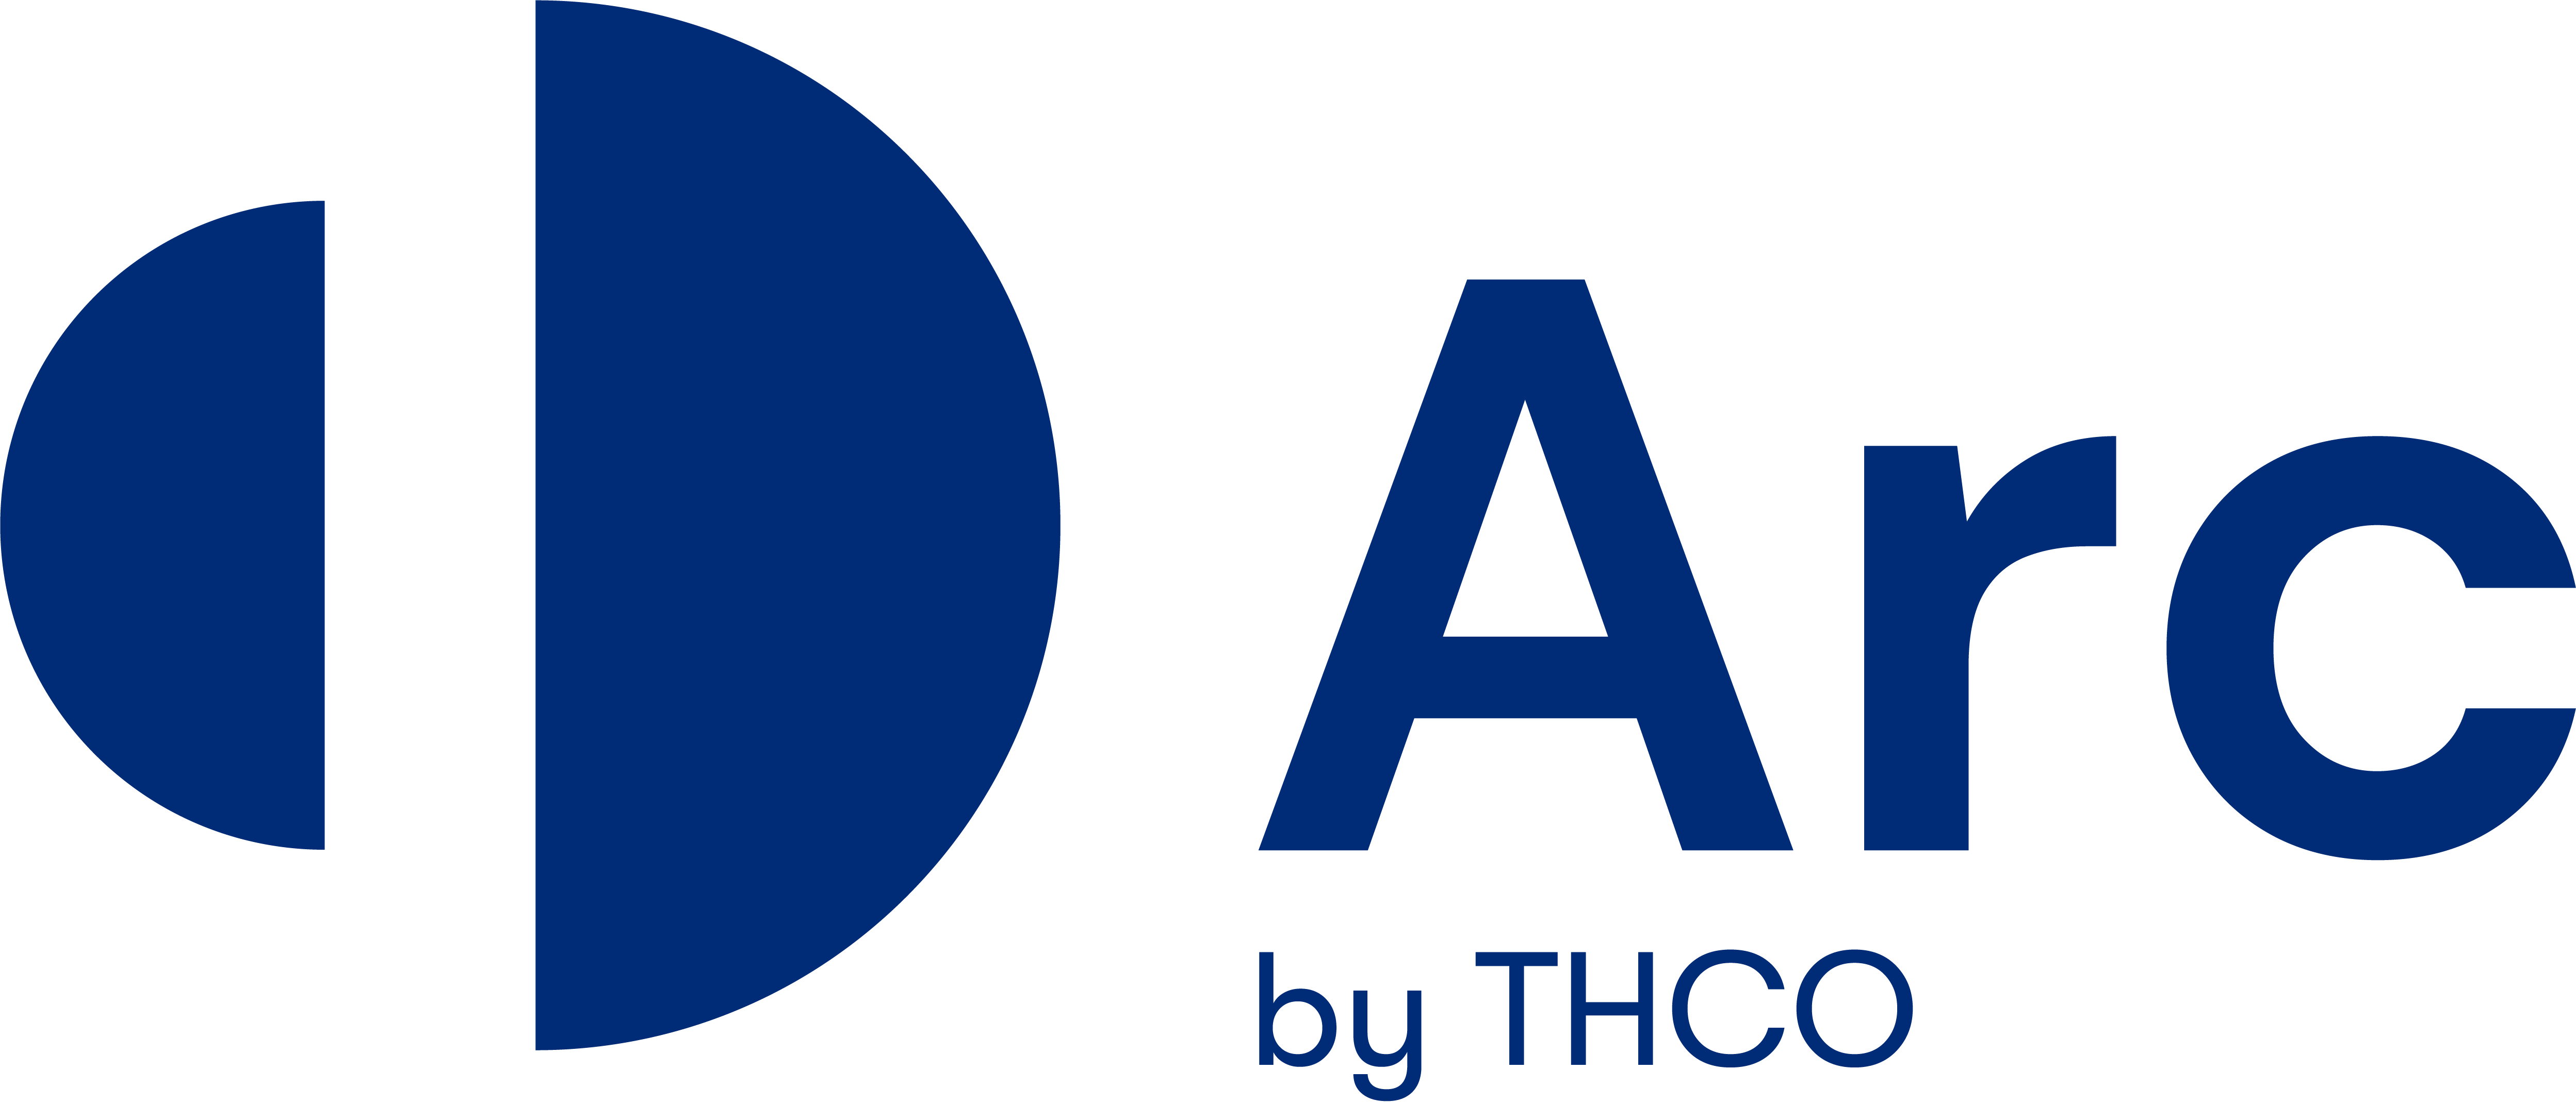 Arc logo 2